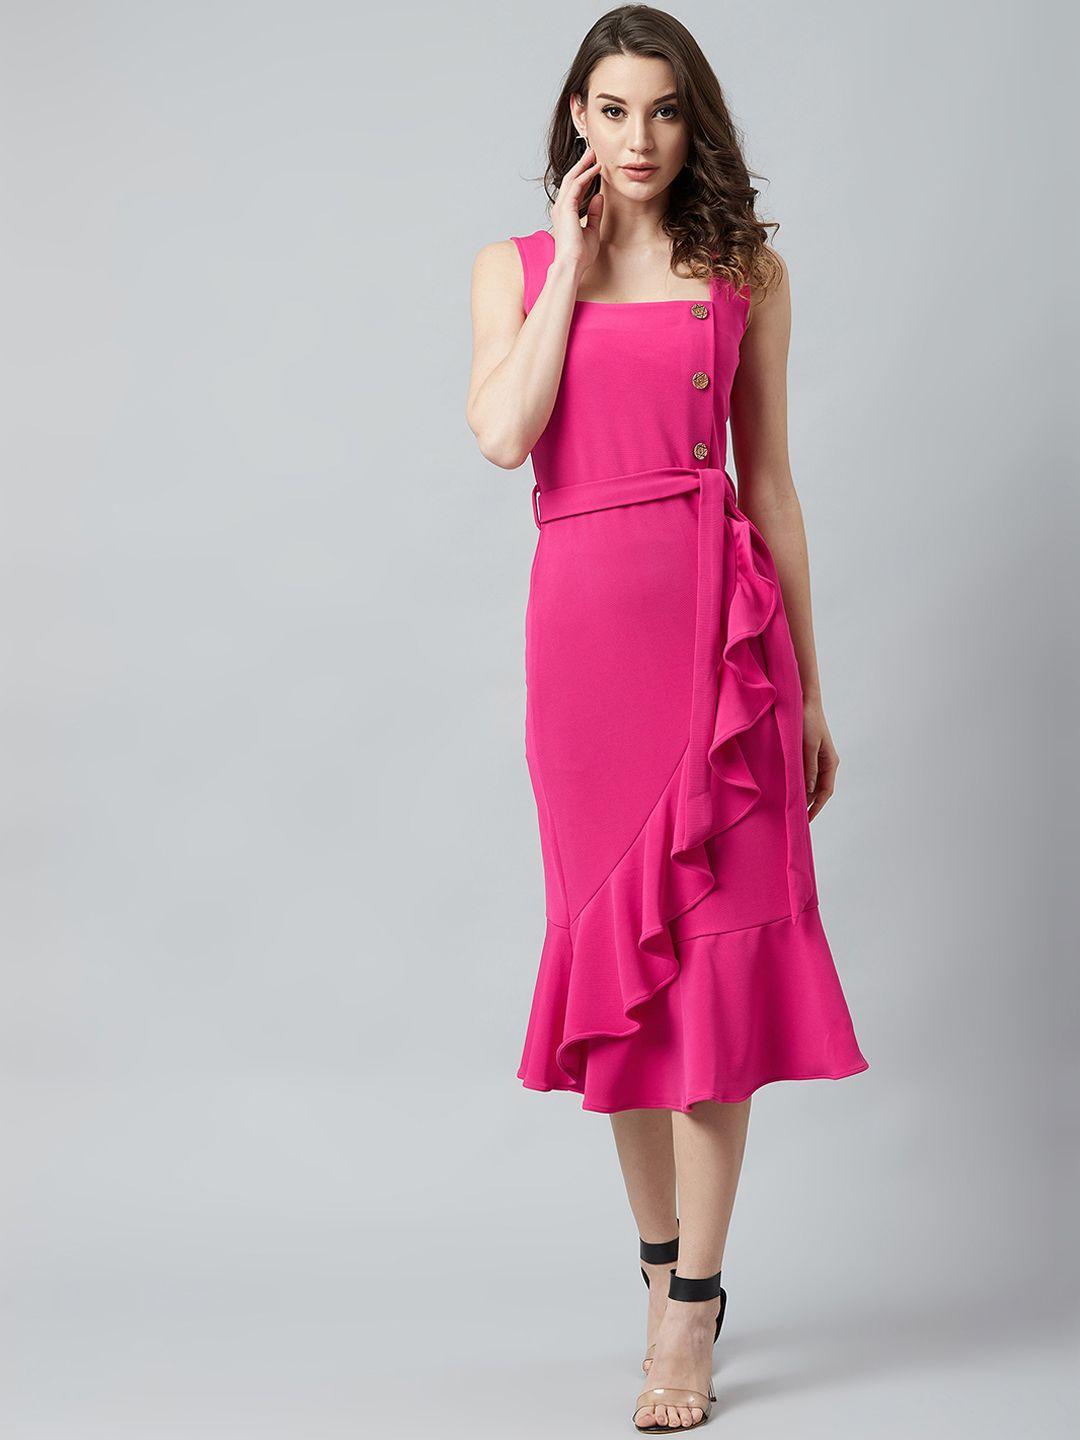 athena pink solid a-line dress